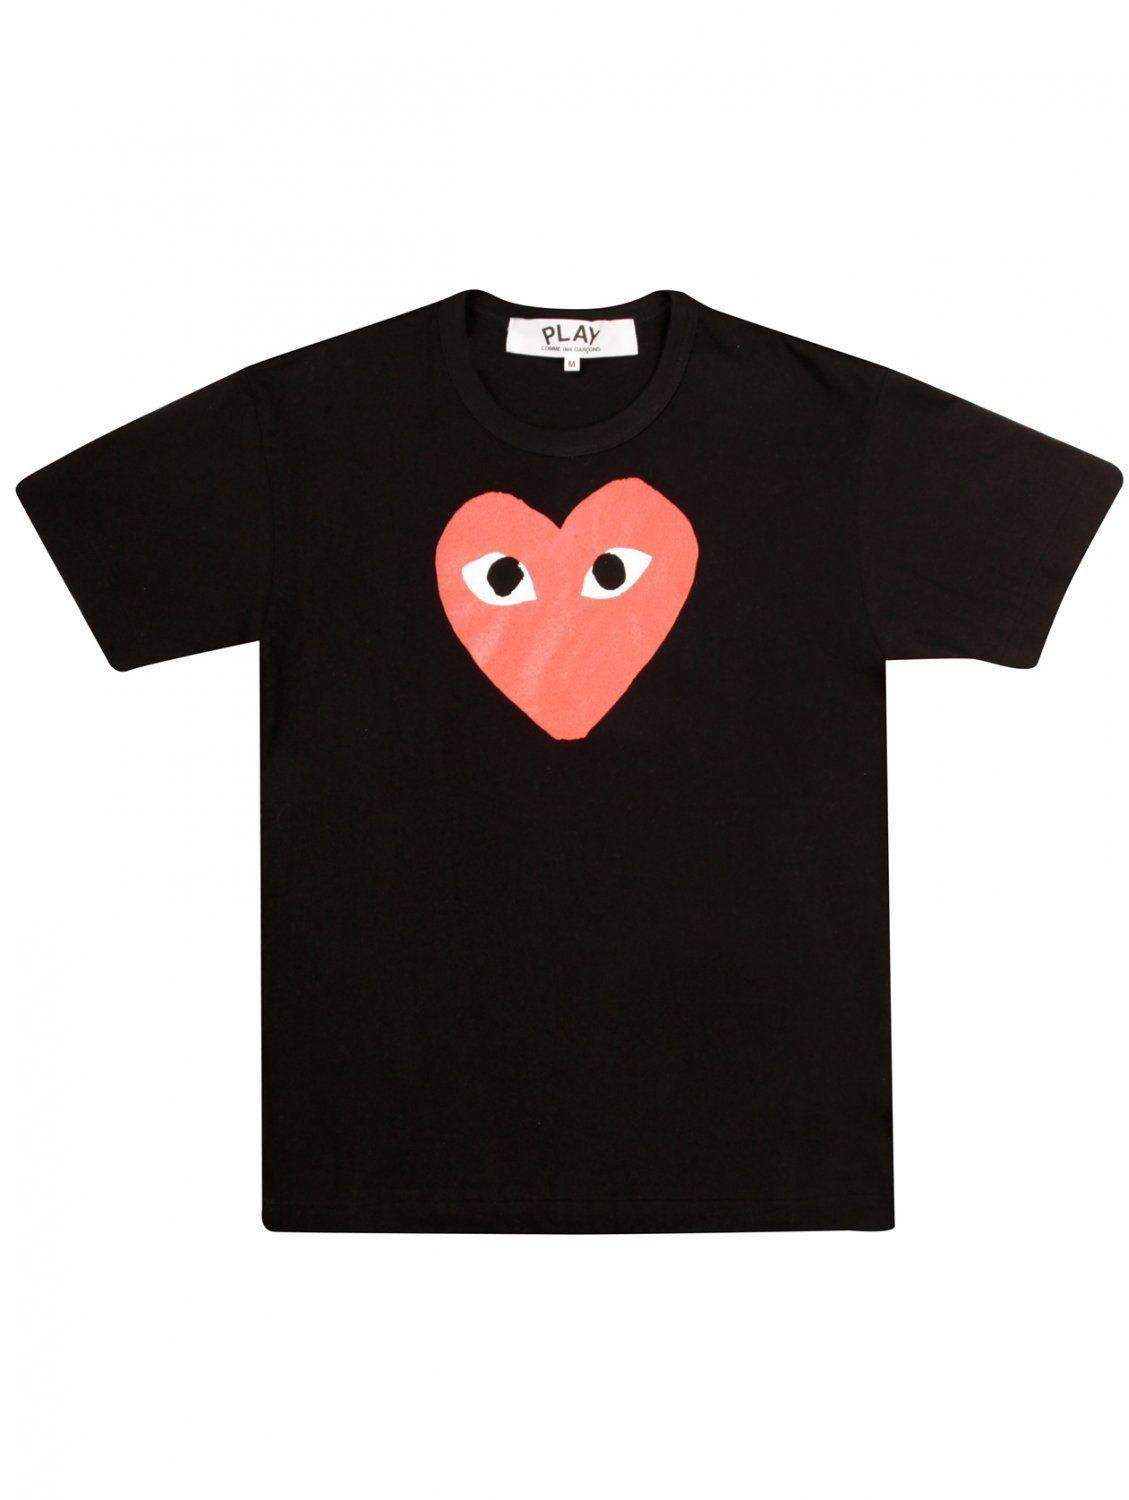 CDG Heart Logo - Comme Des Garcons PLAY Heart Logo T Shirt Black